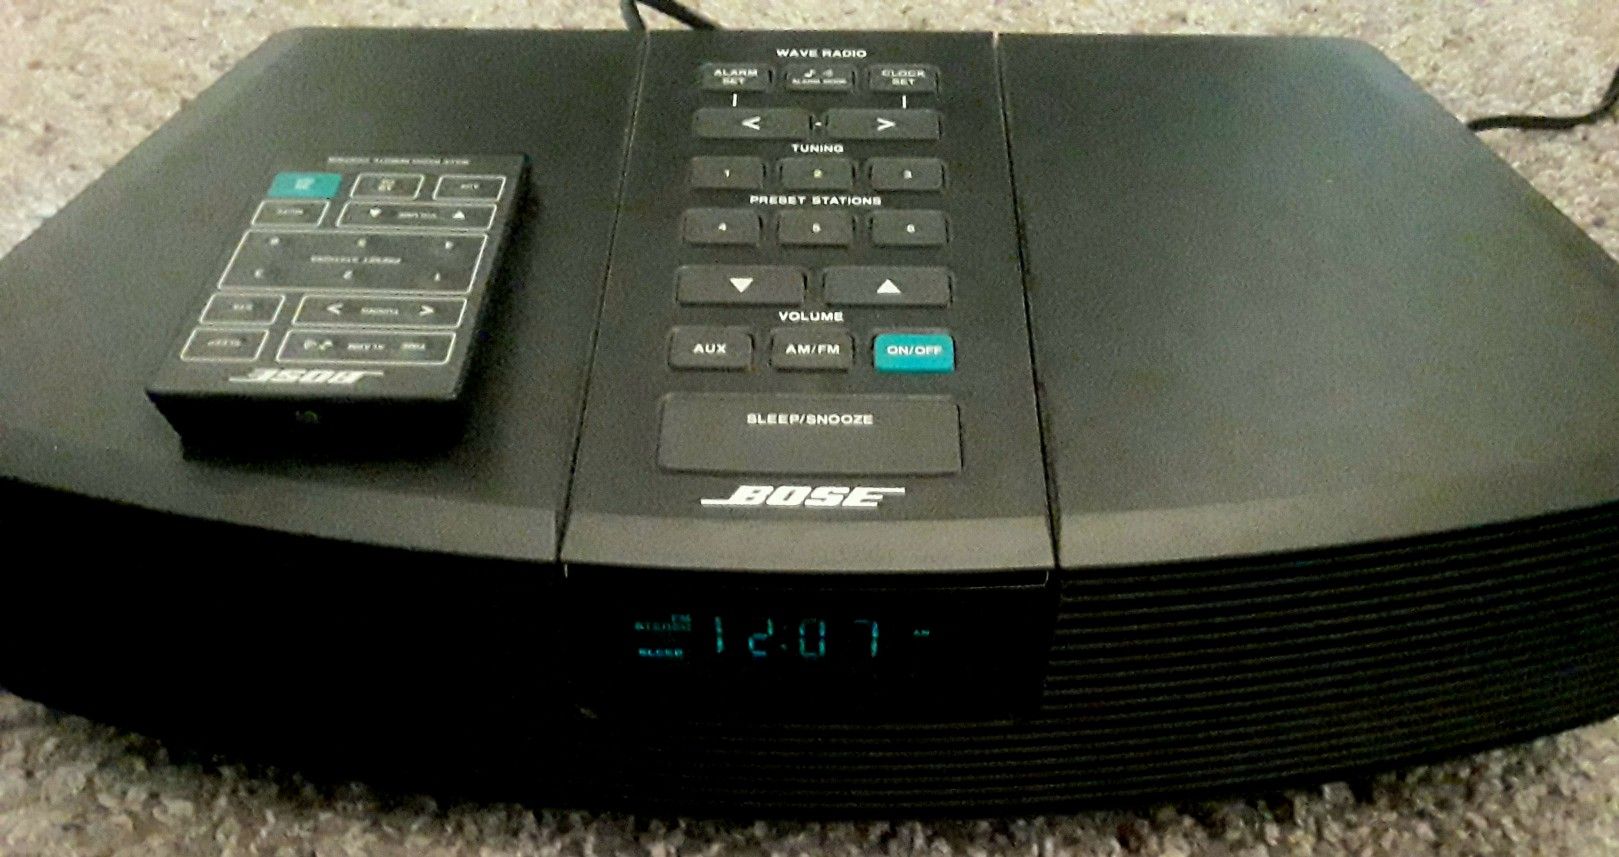 Bose Wave Radio w/ remote